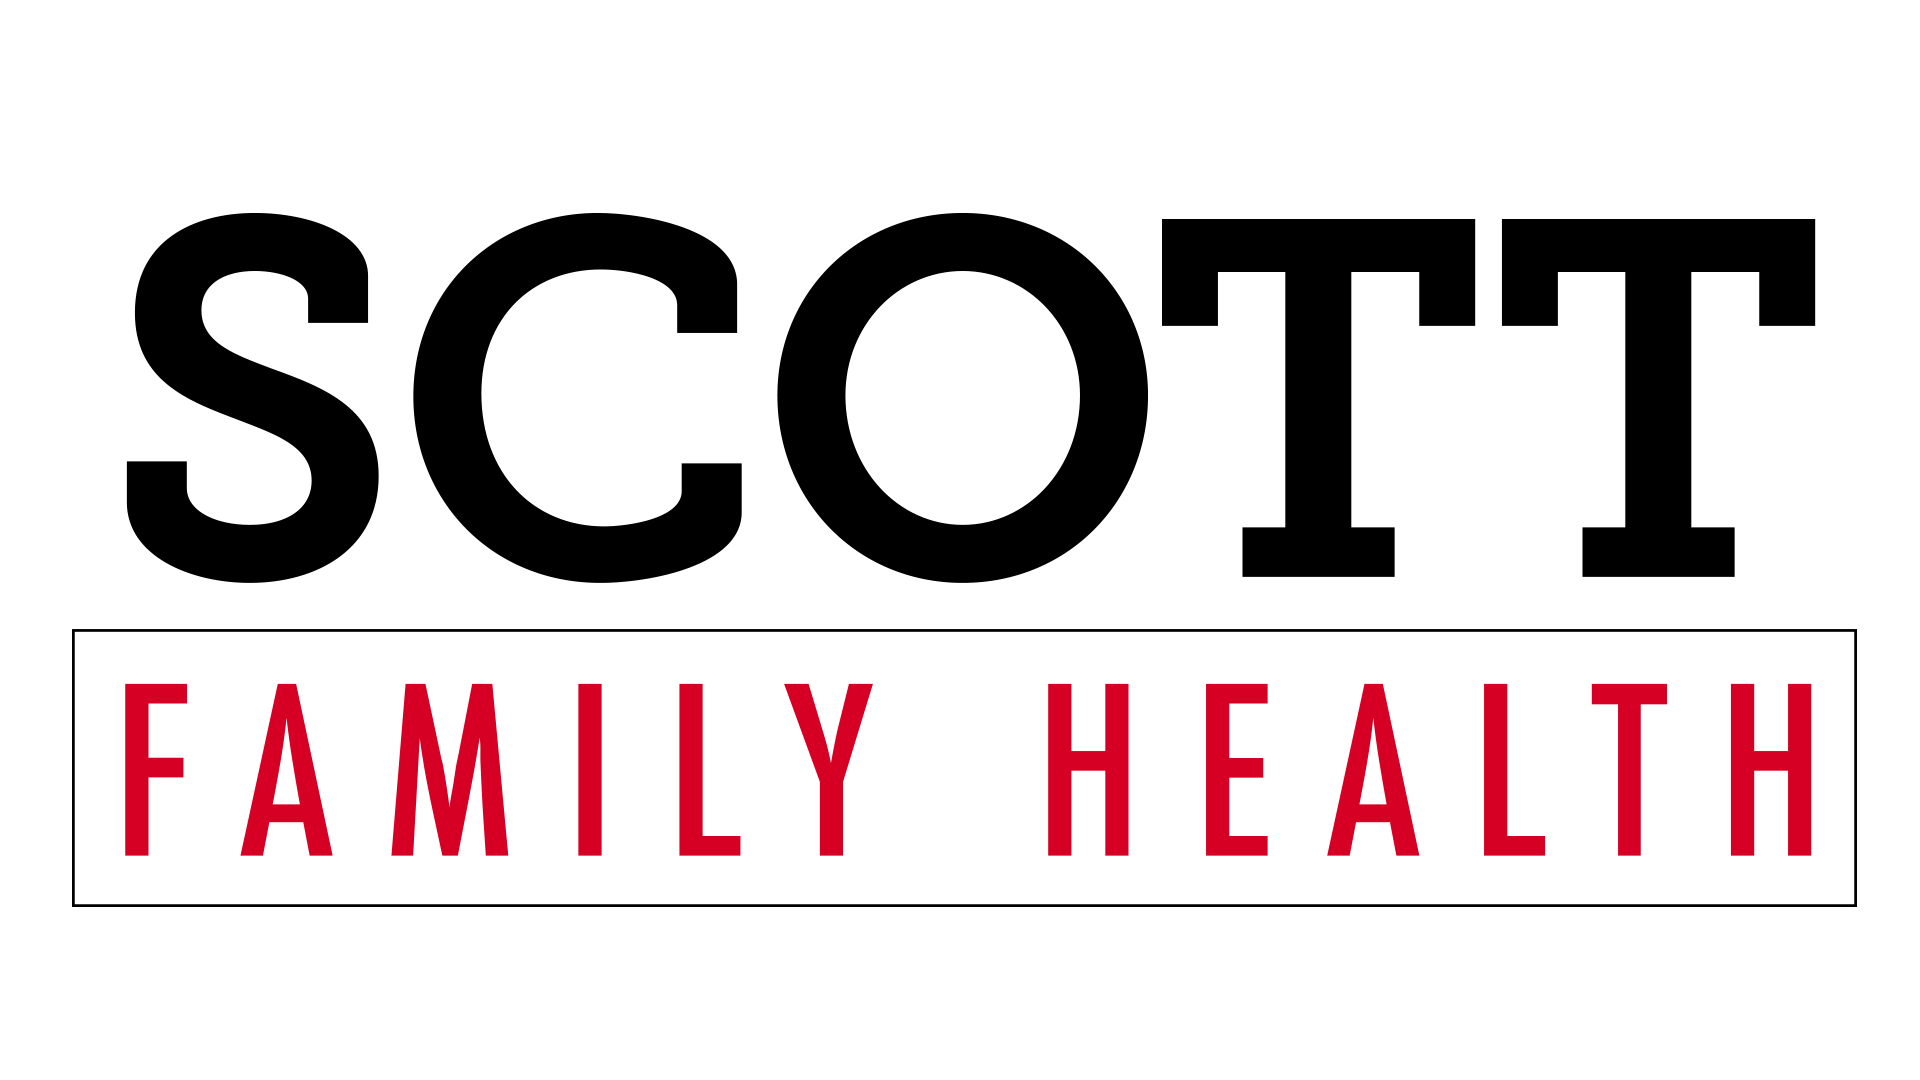 Scott Family Health